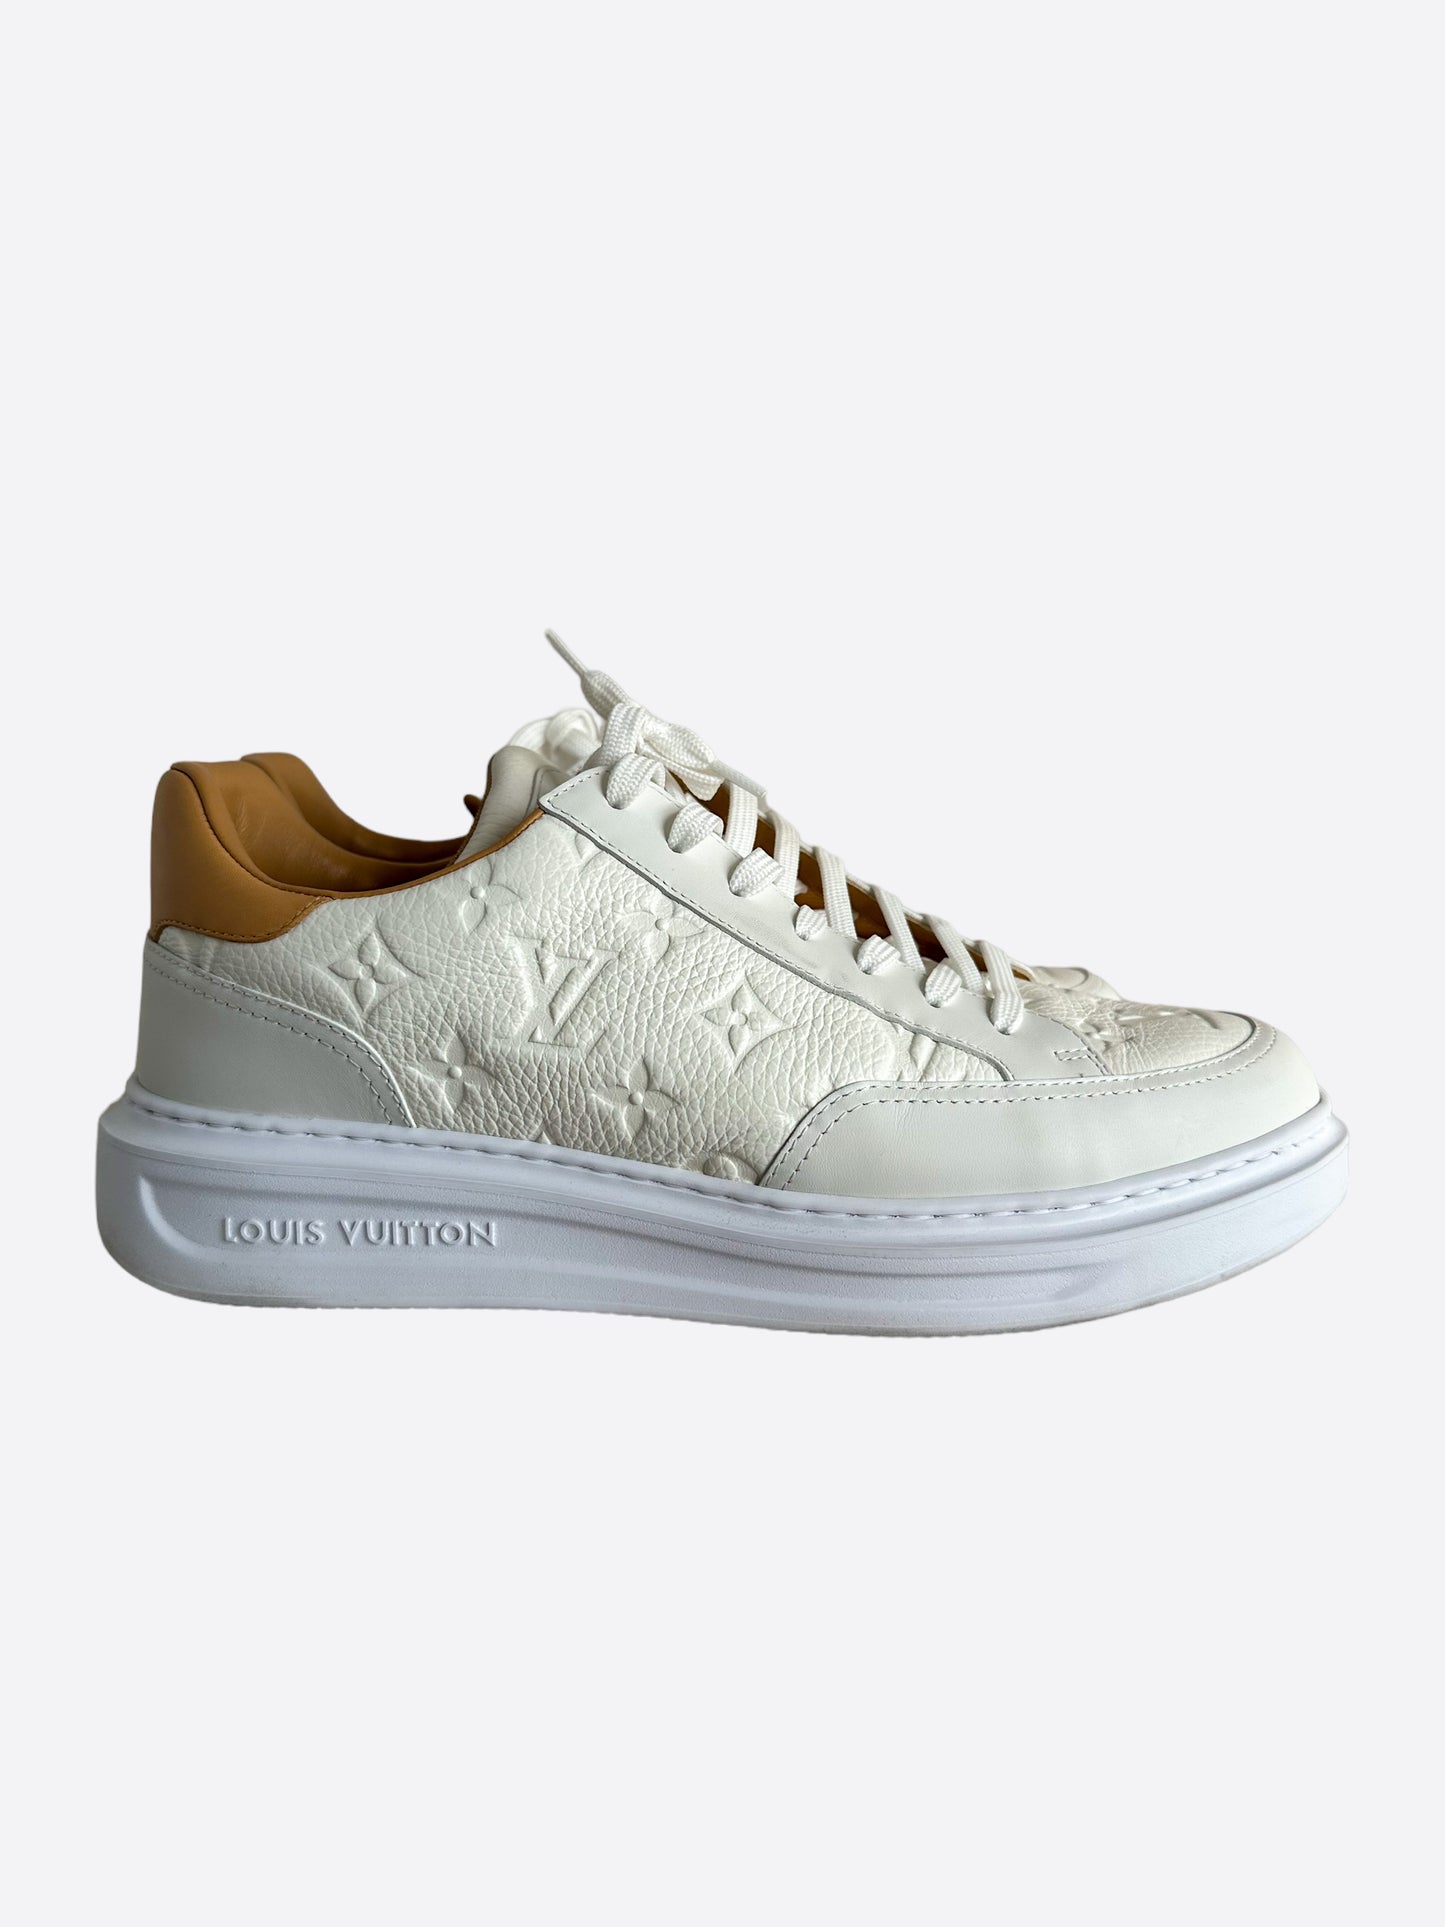 Louis Vuitton Monogram Beverly Hills Sneaker, White, 9.5